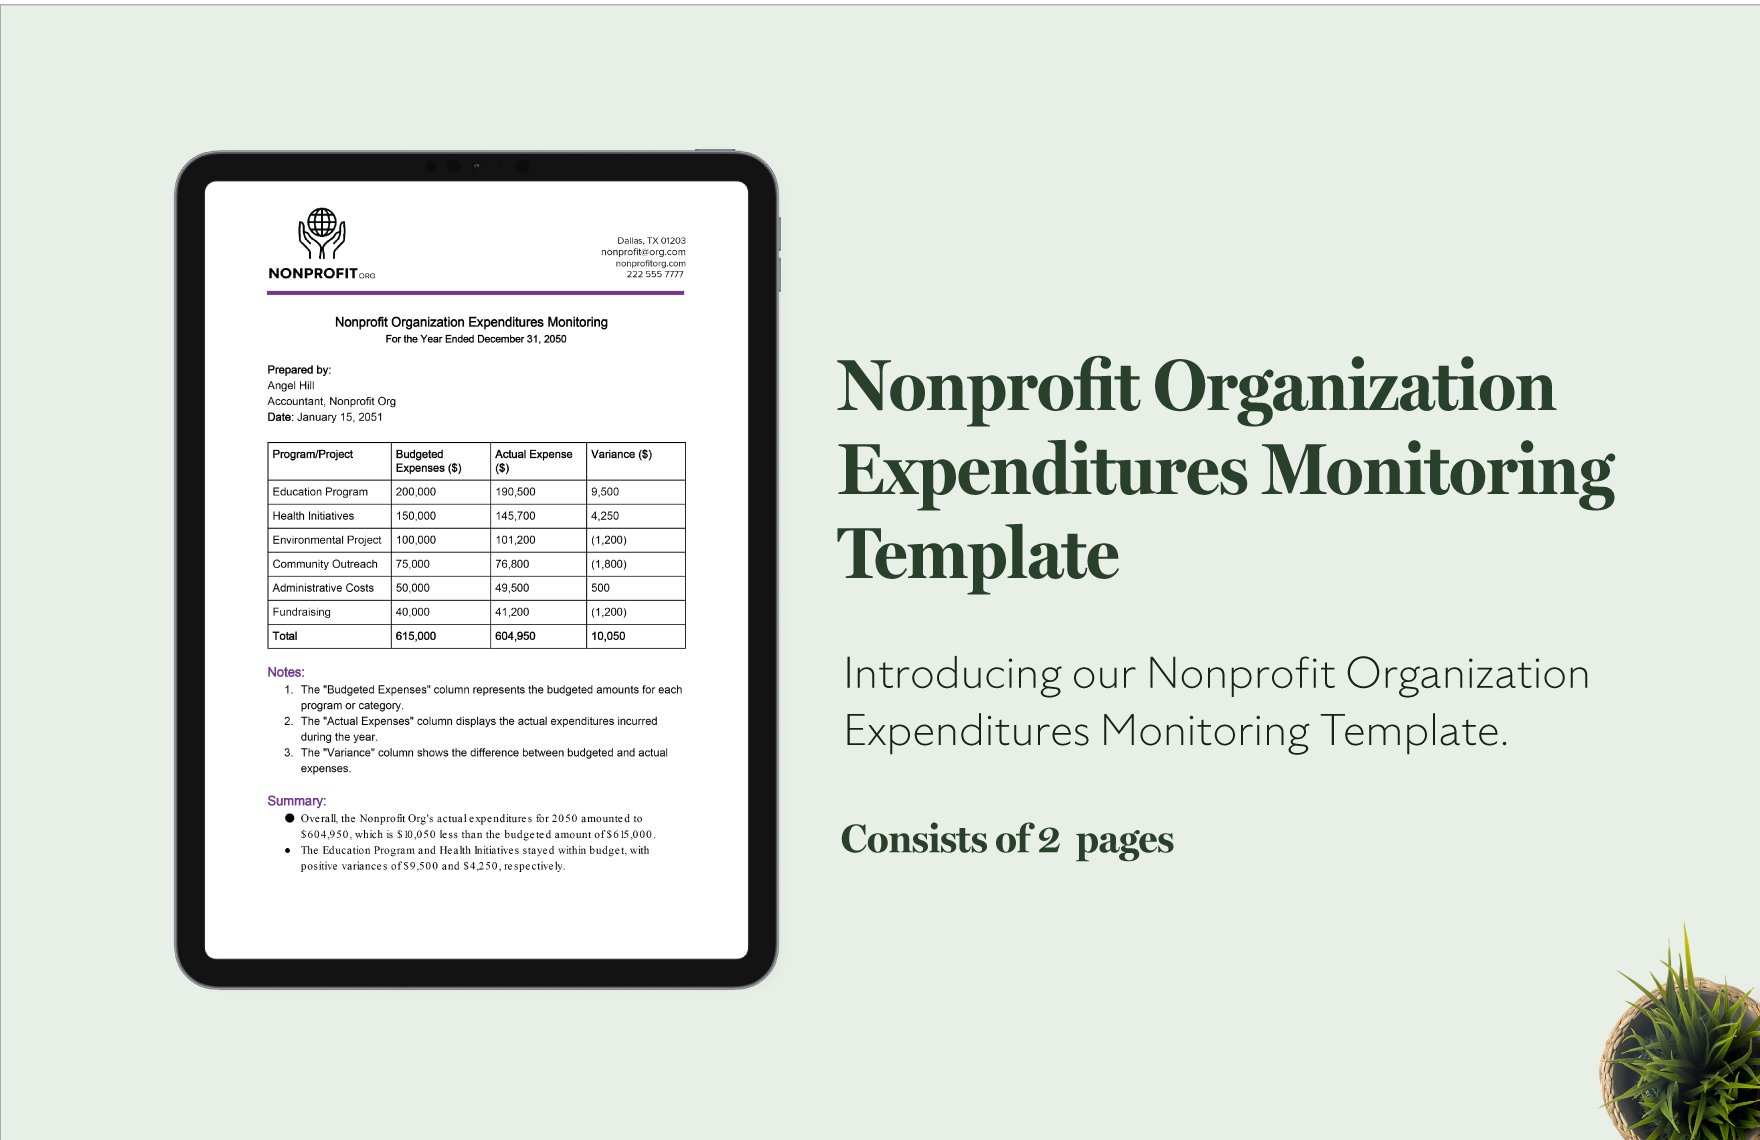 Nonprofit Organization Expenditures Monitoring Template